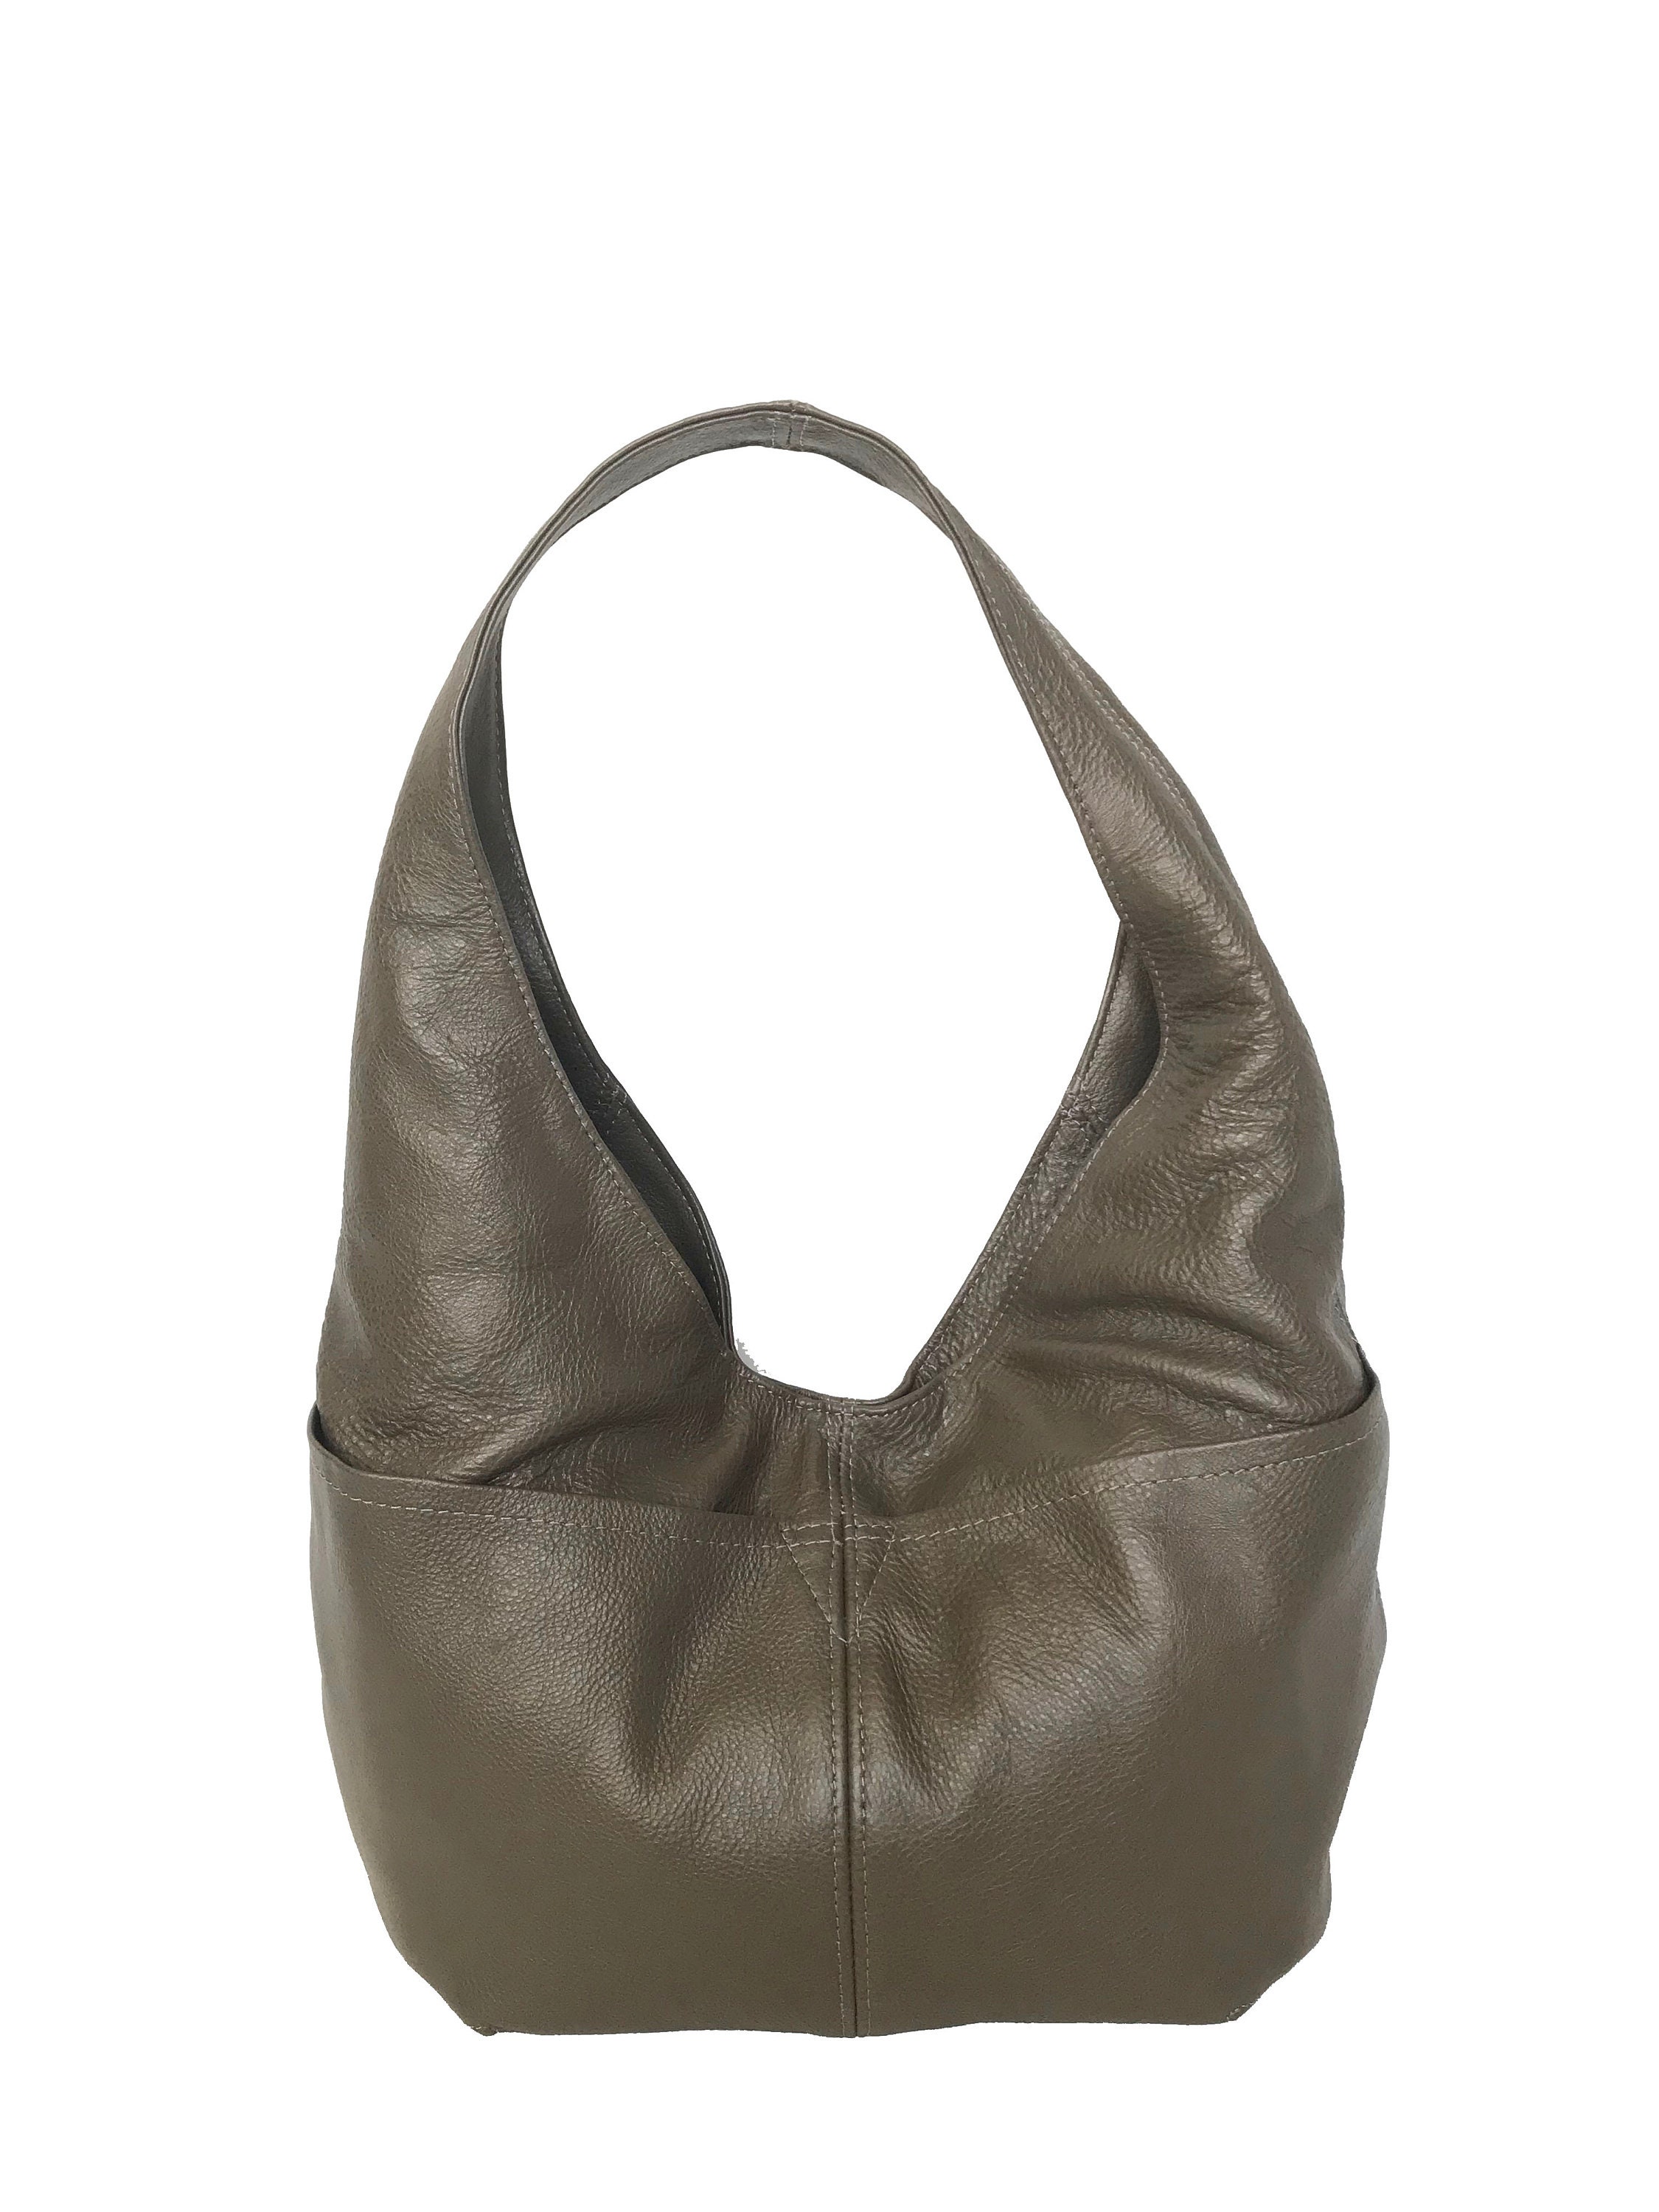 Slouchy Leather Hobo Bag w/ Pockets Trendy Bag Fashion | Etsy